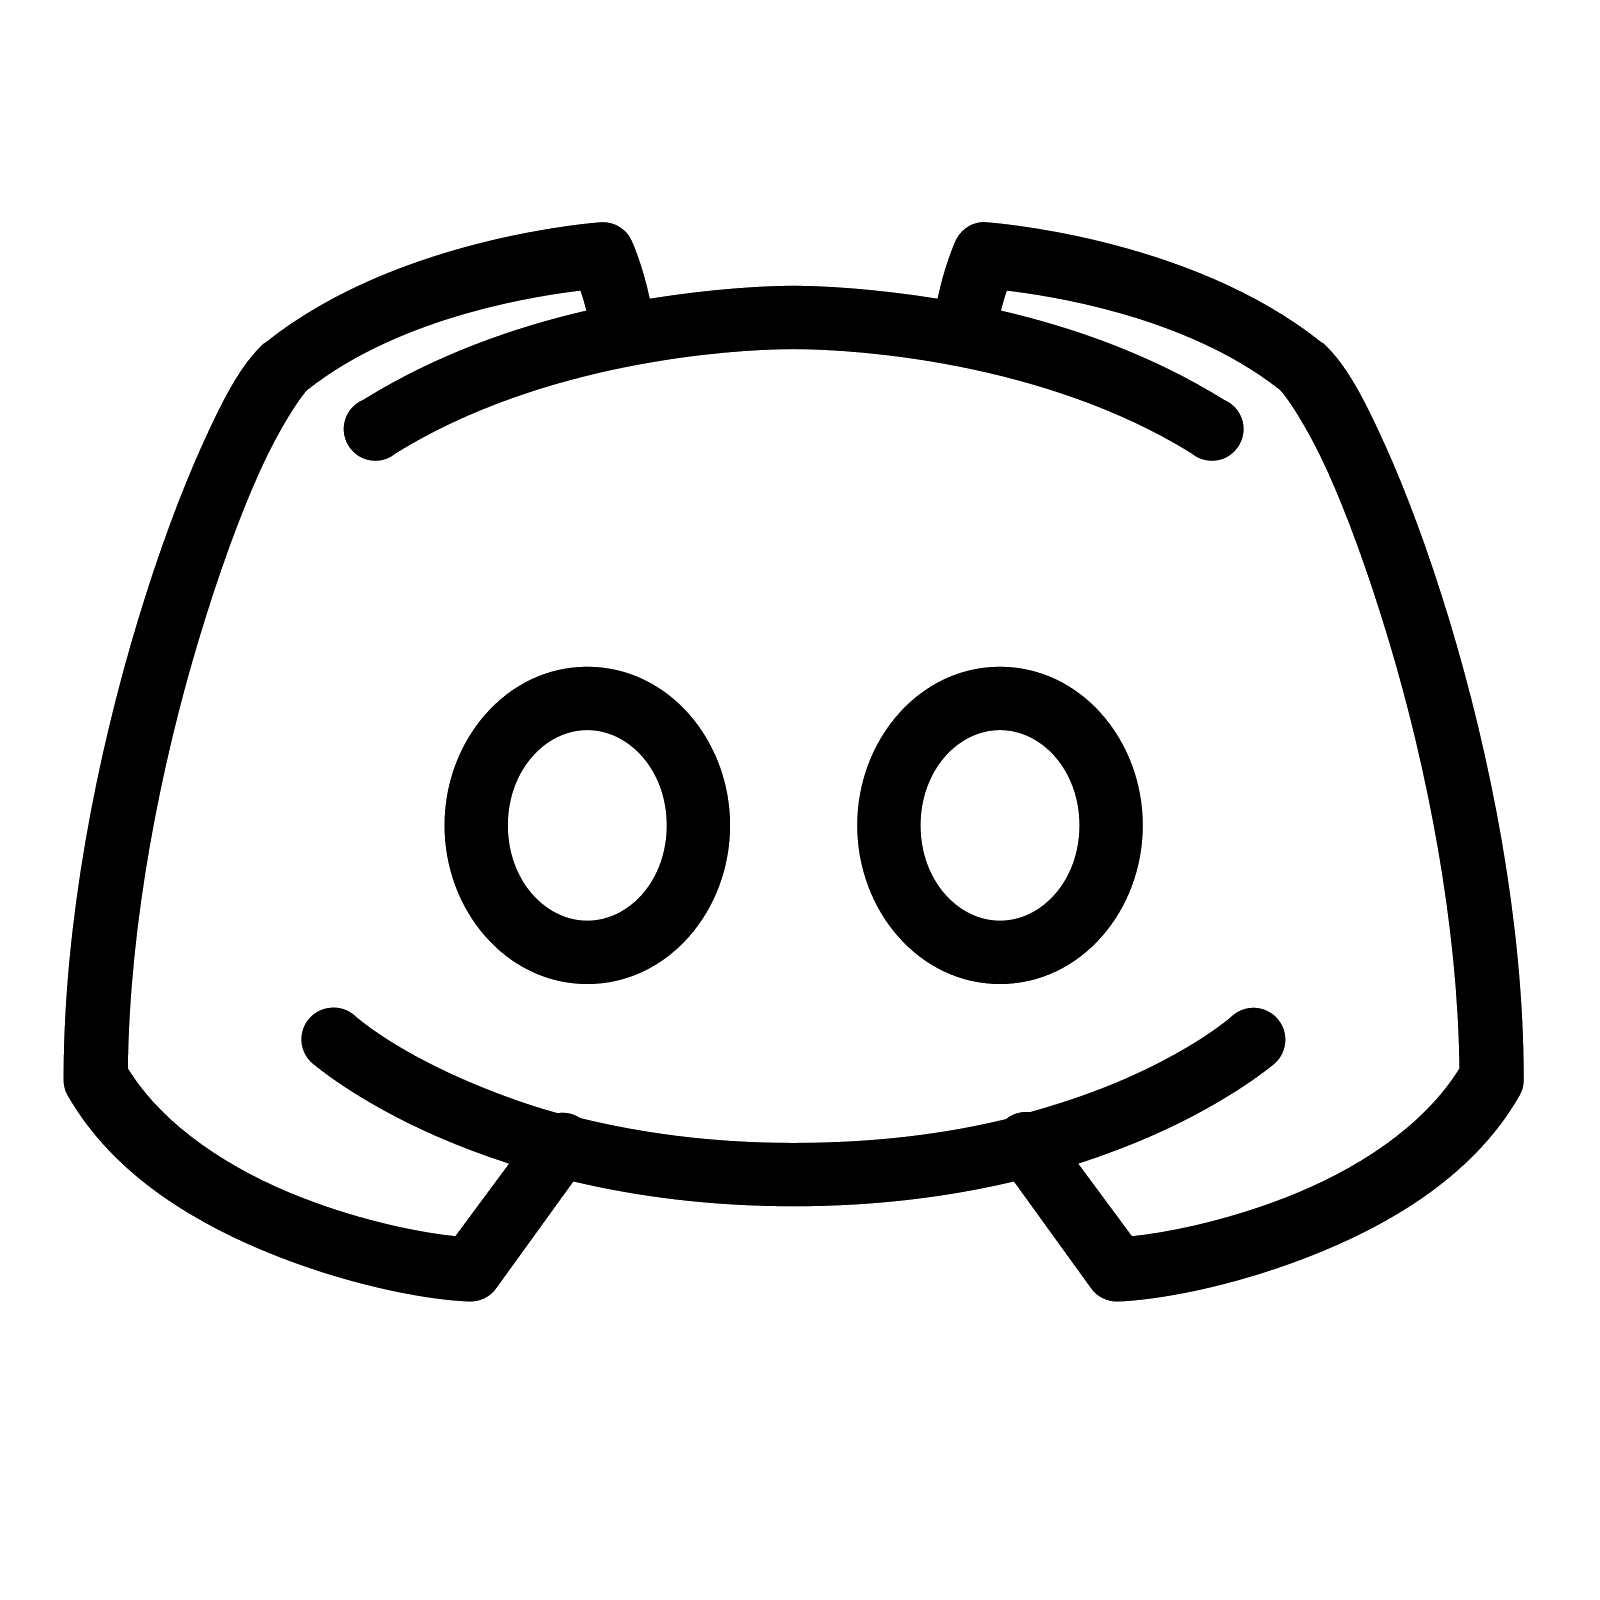 Blauw Discord Logo PNG Pic